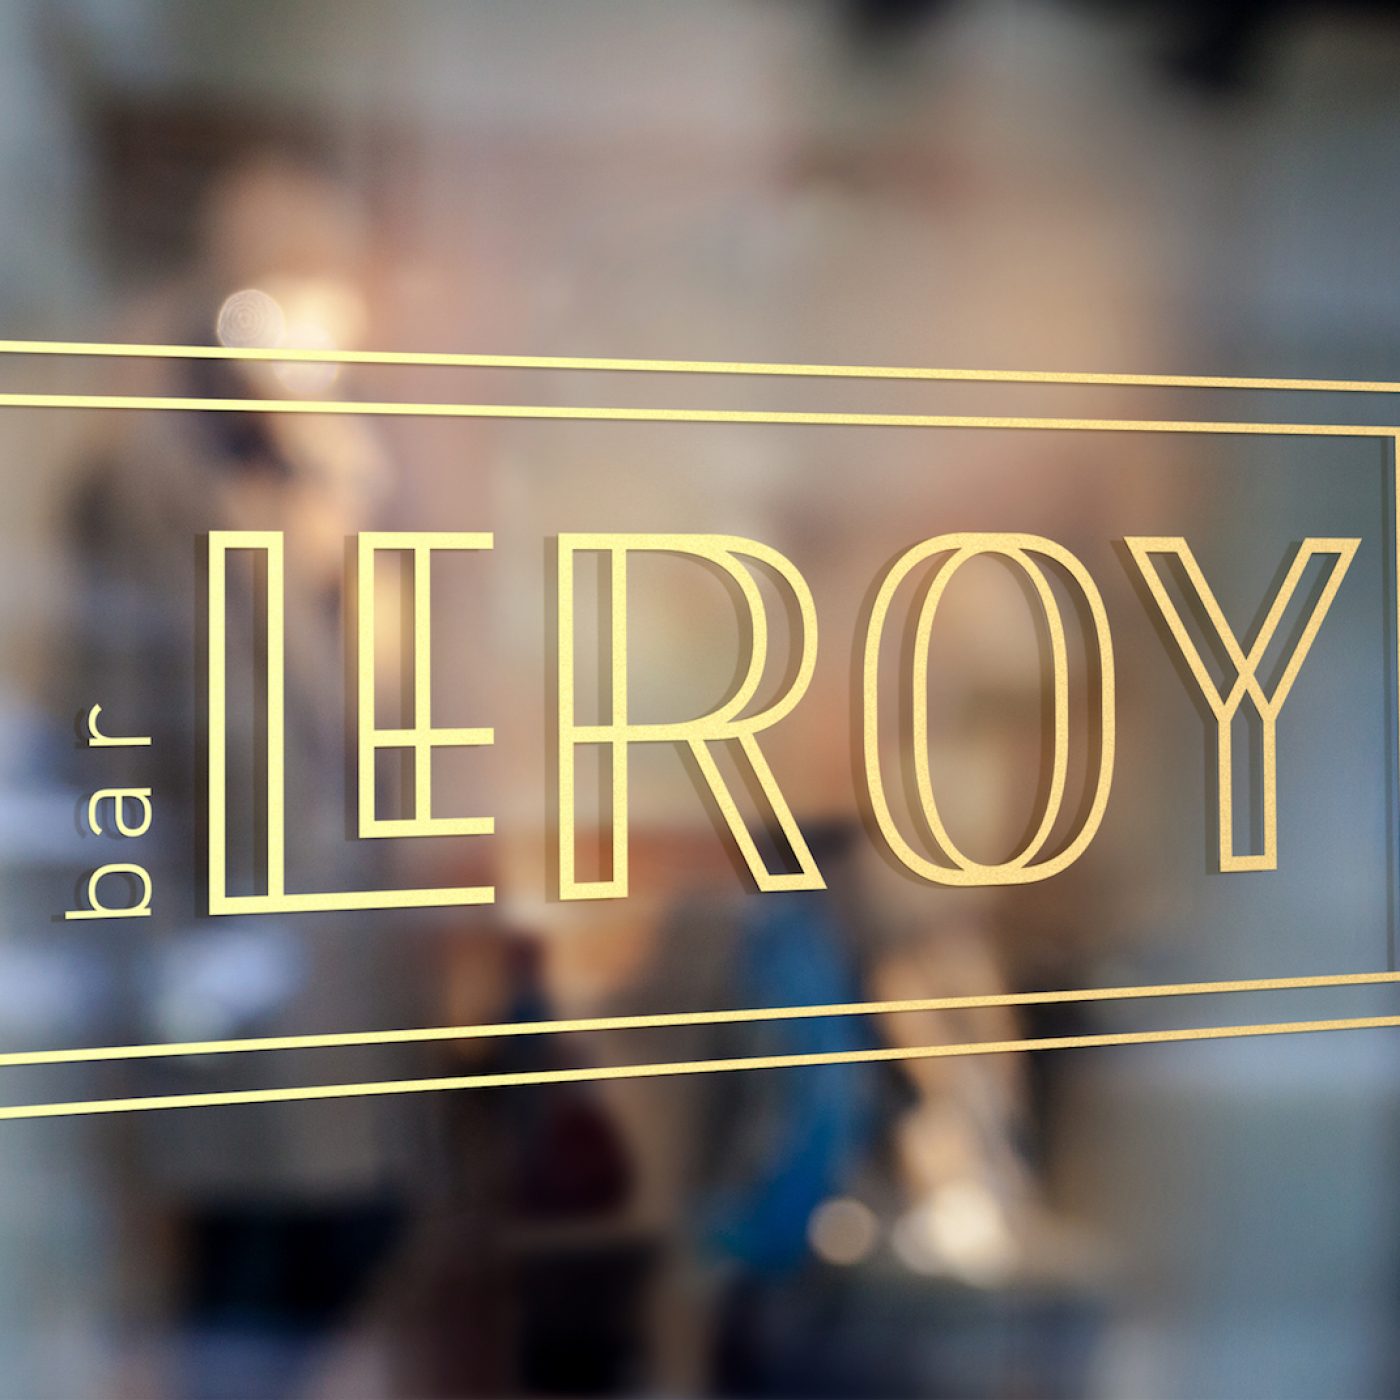 Bar Leroy sign Leakey renovation gold text window